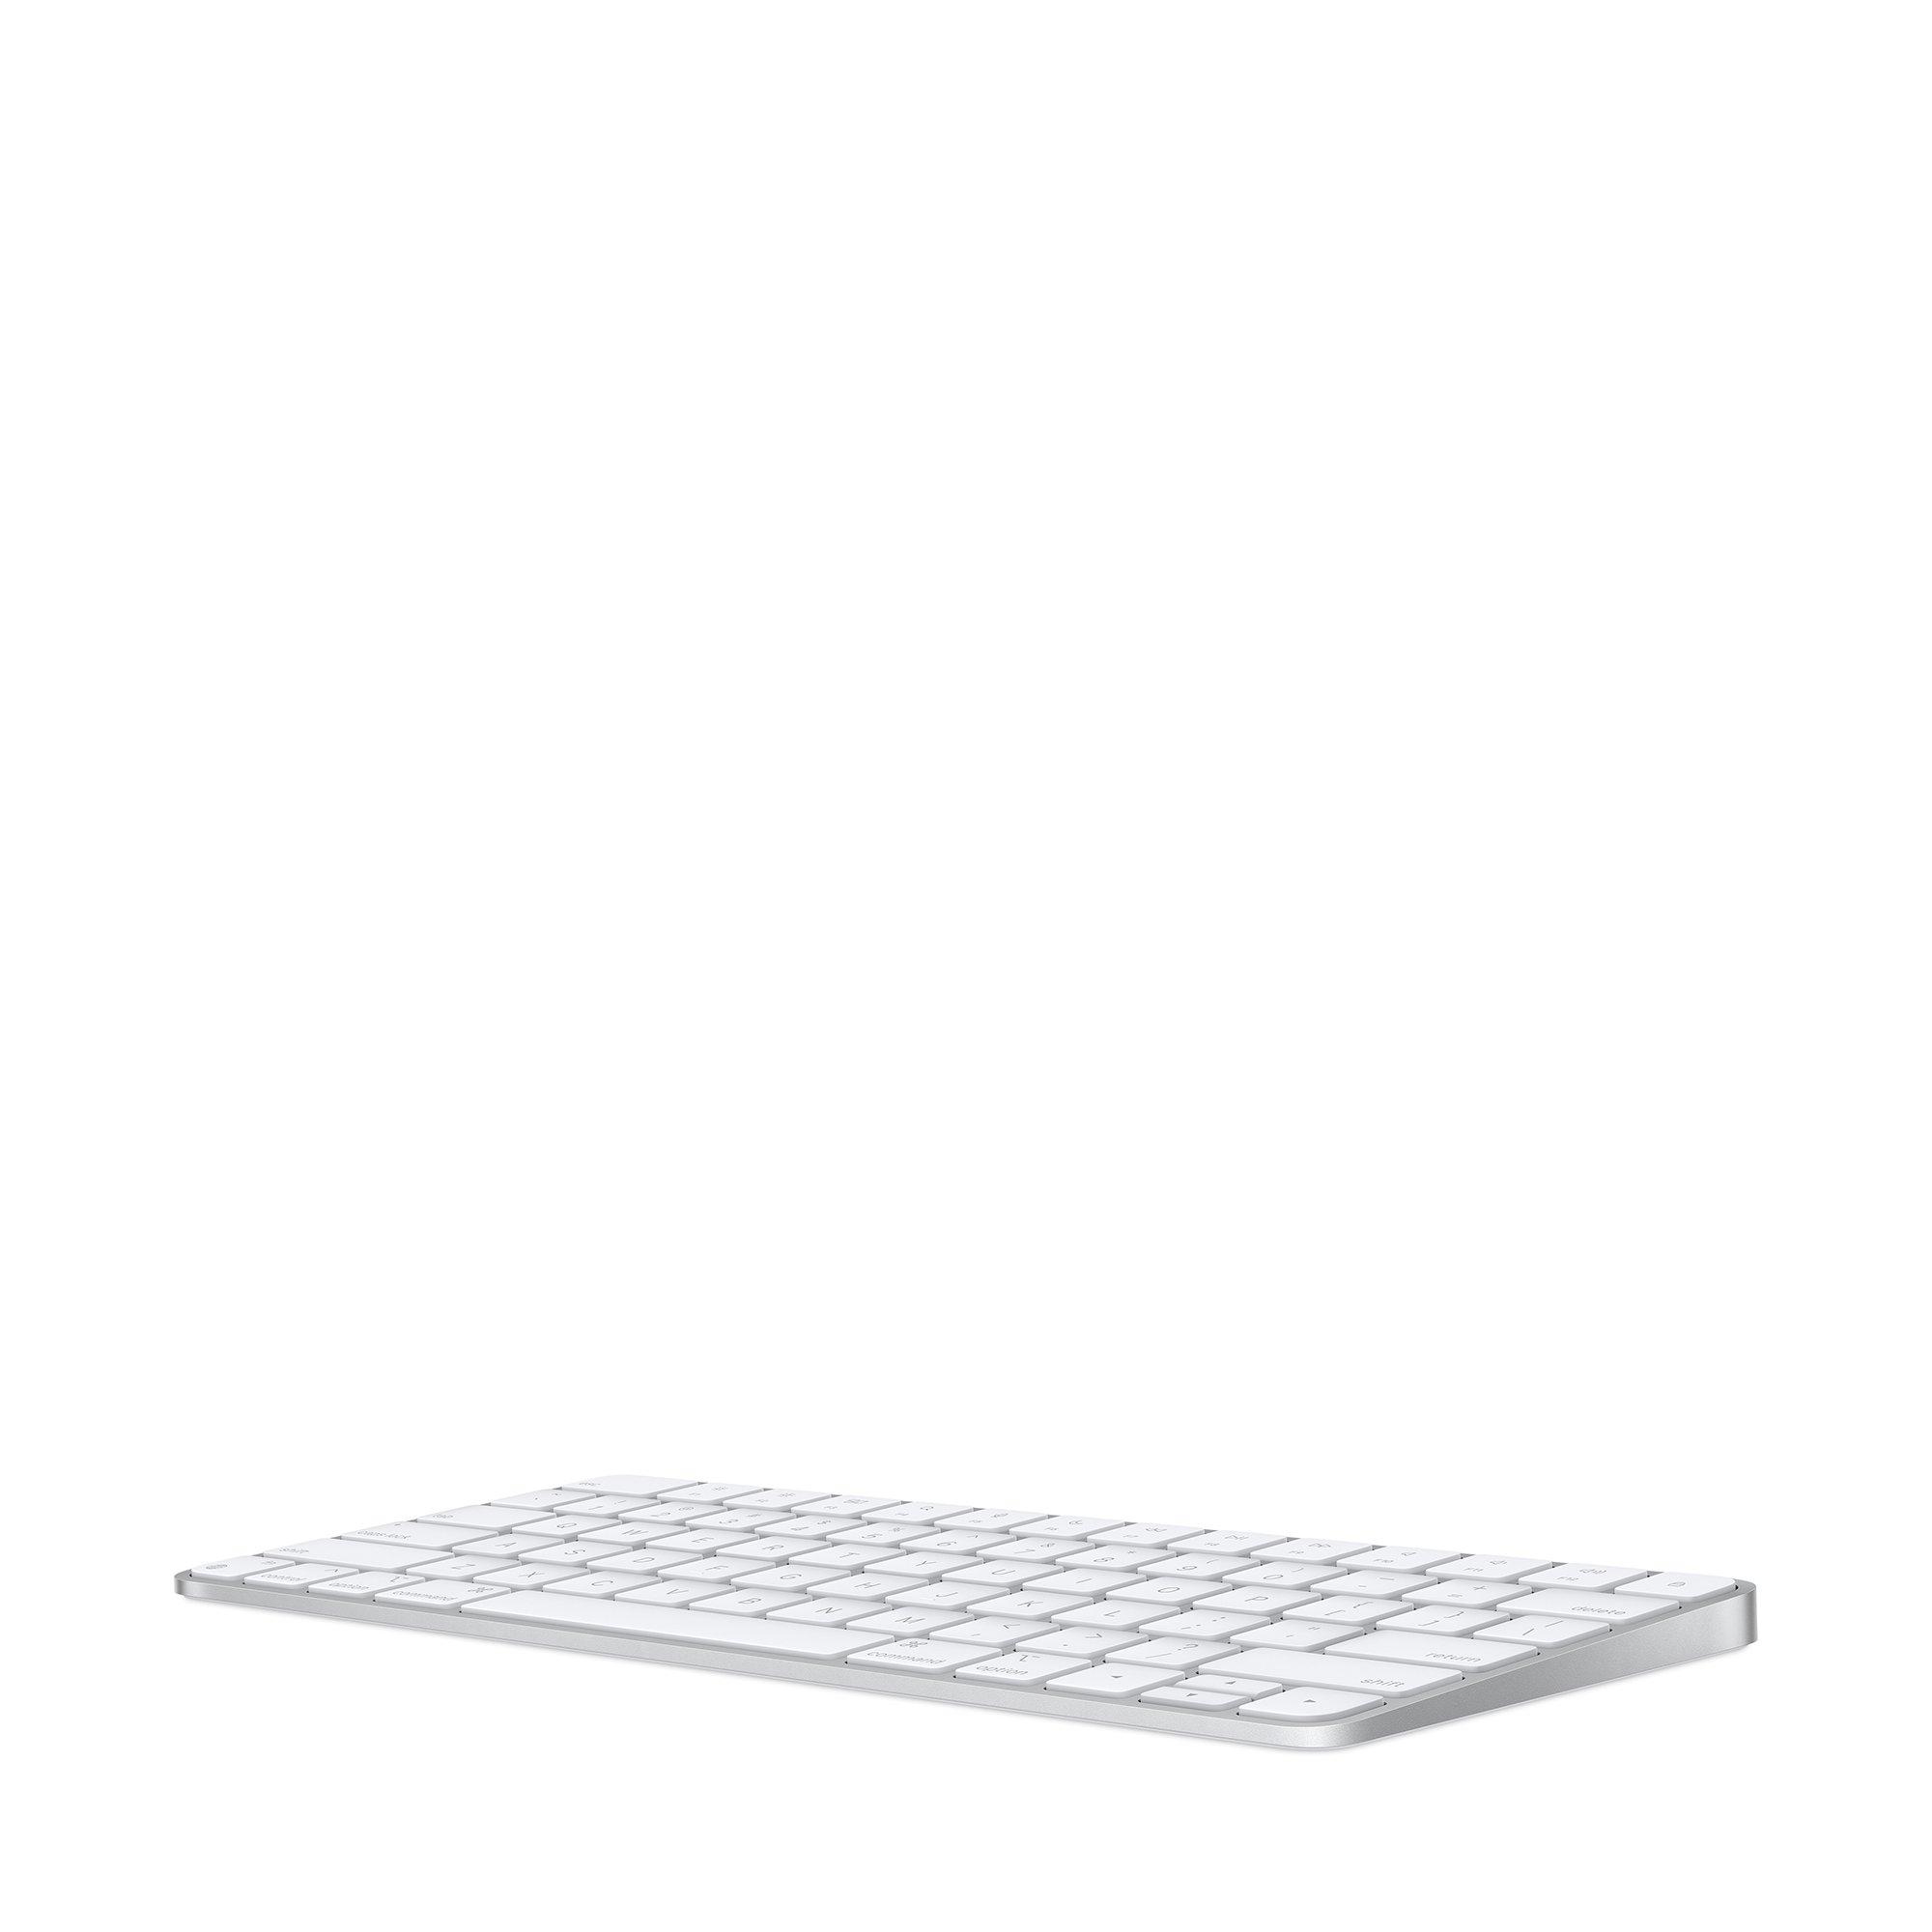 Apple Magic Keyboard (CH-Layout) Kabellose Tastatur 